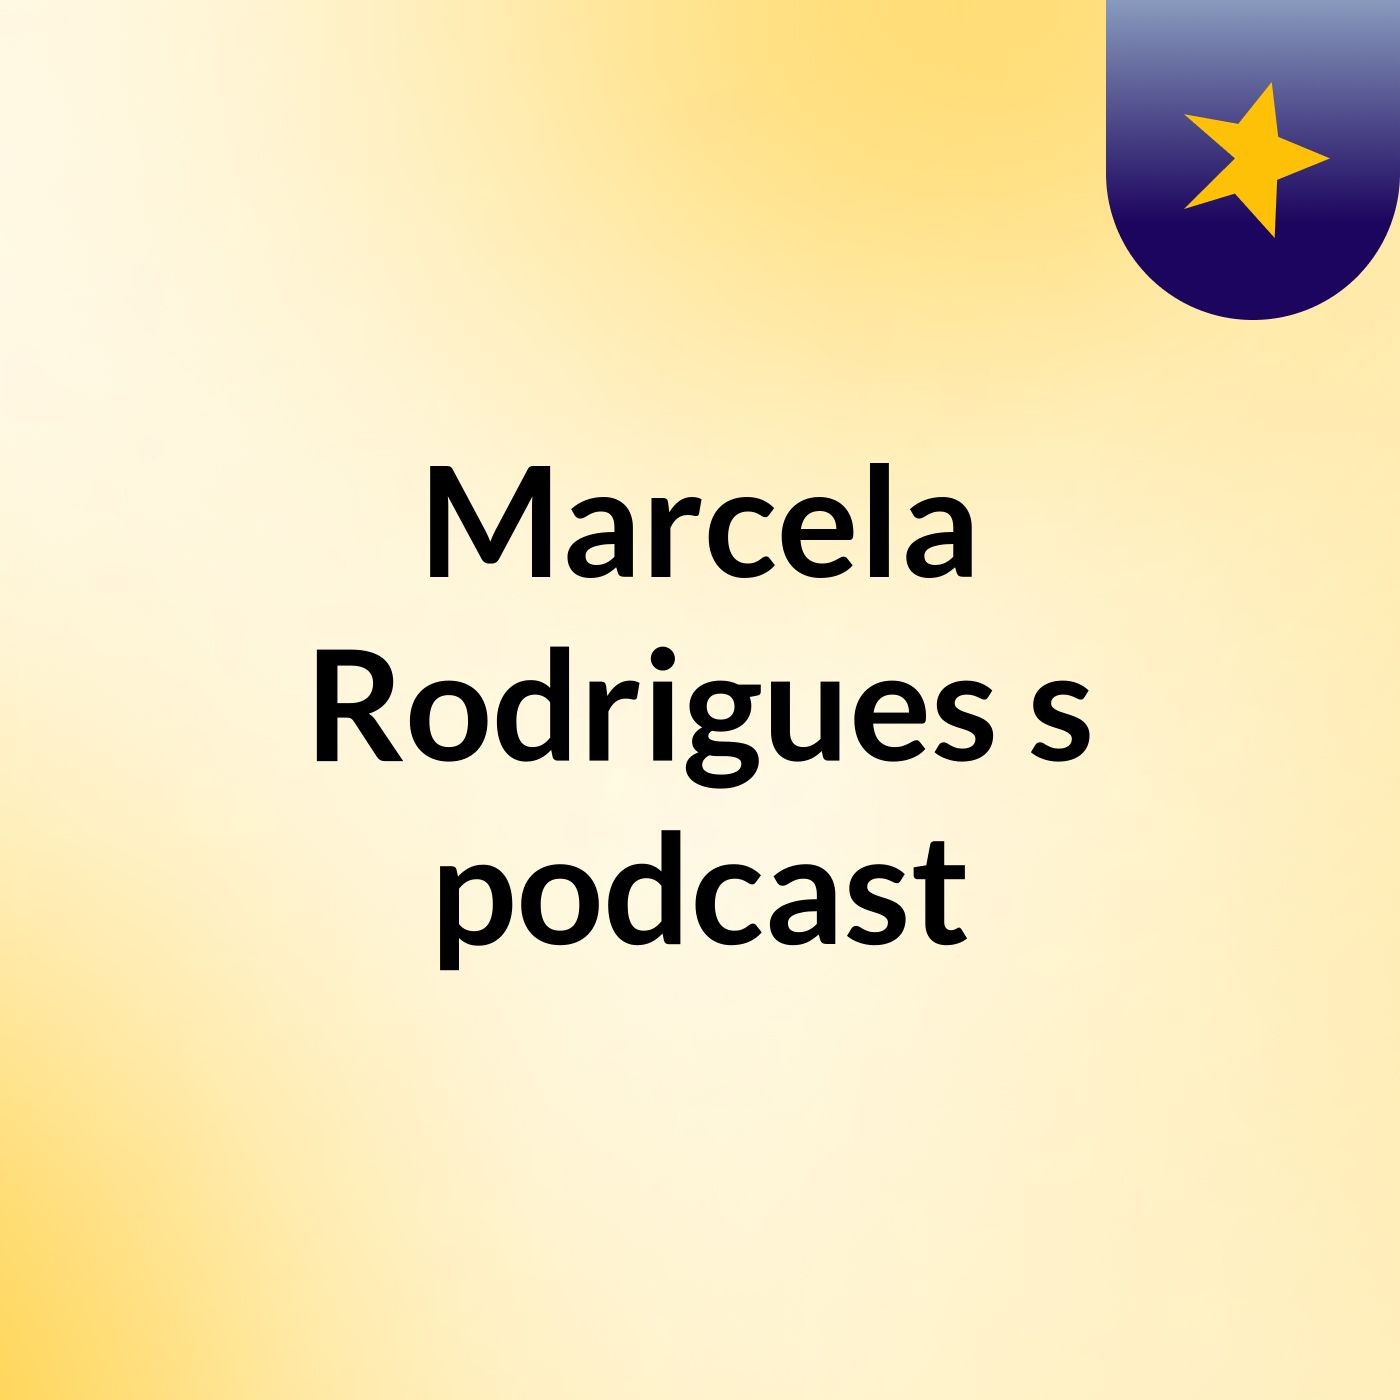 Marcela Rodrigues's podcast